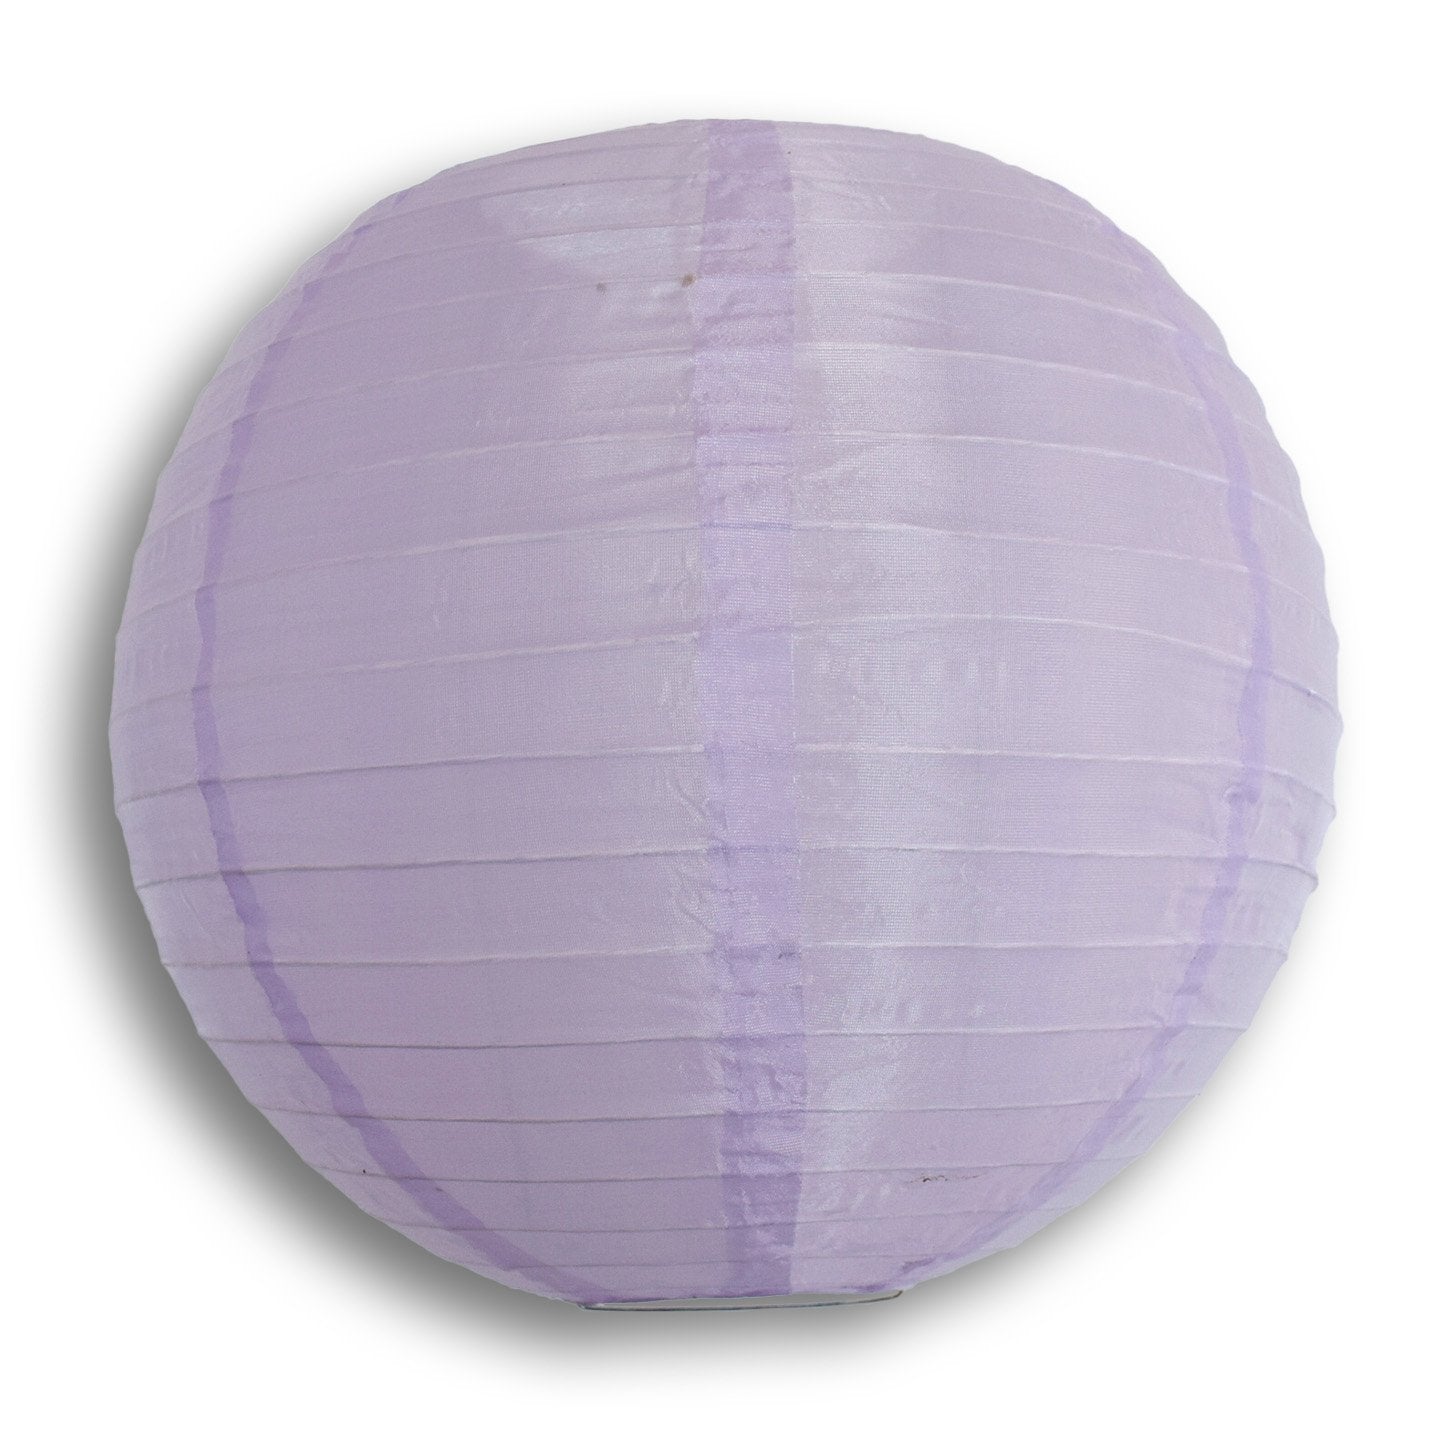 30" Light Purple Jumbo Shimmering Nylon Lantern, Even Ribbing, Durable, Dry Outdoor Hanging Decoration - PaperLanternStore.com - Paper Lanterns, Decor, Party Lights & More